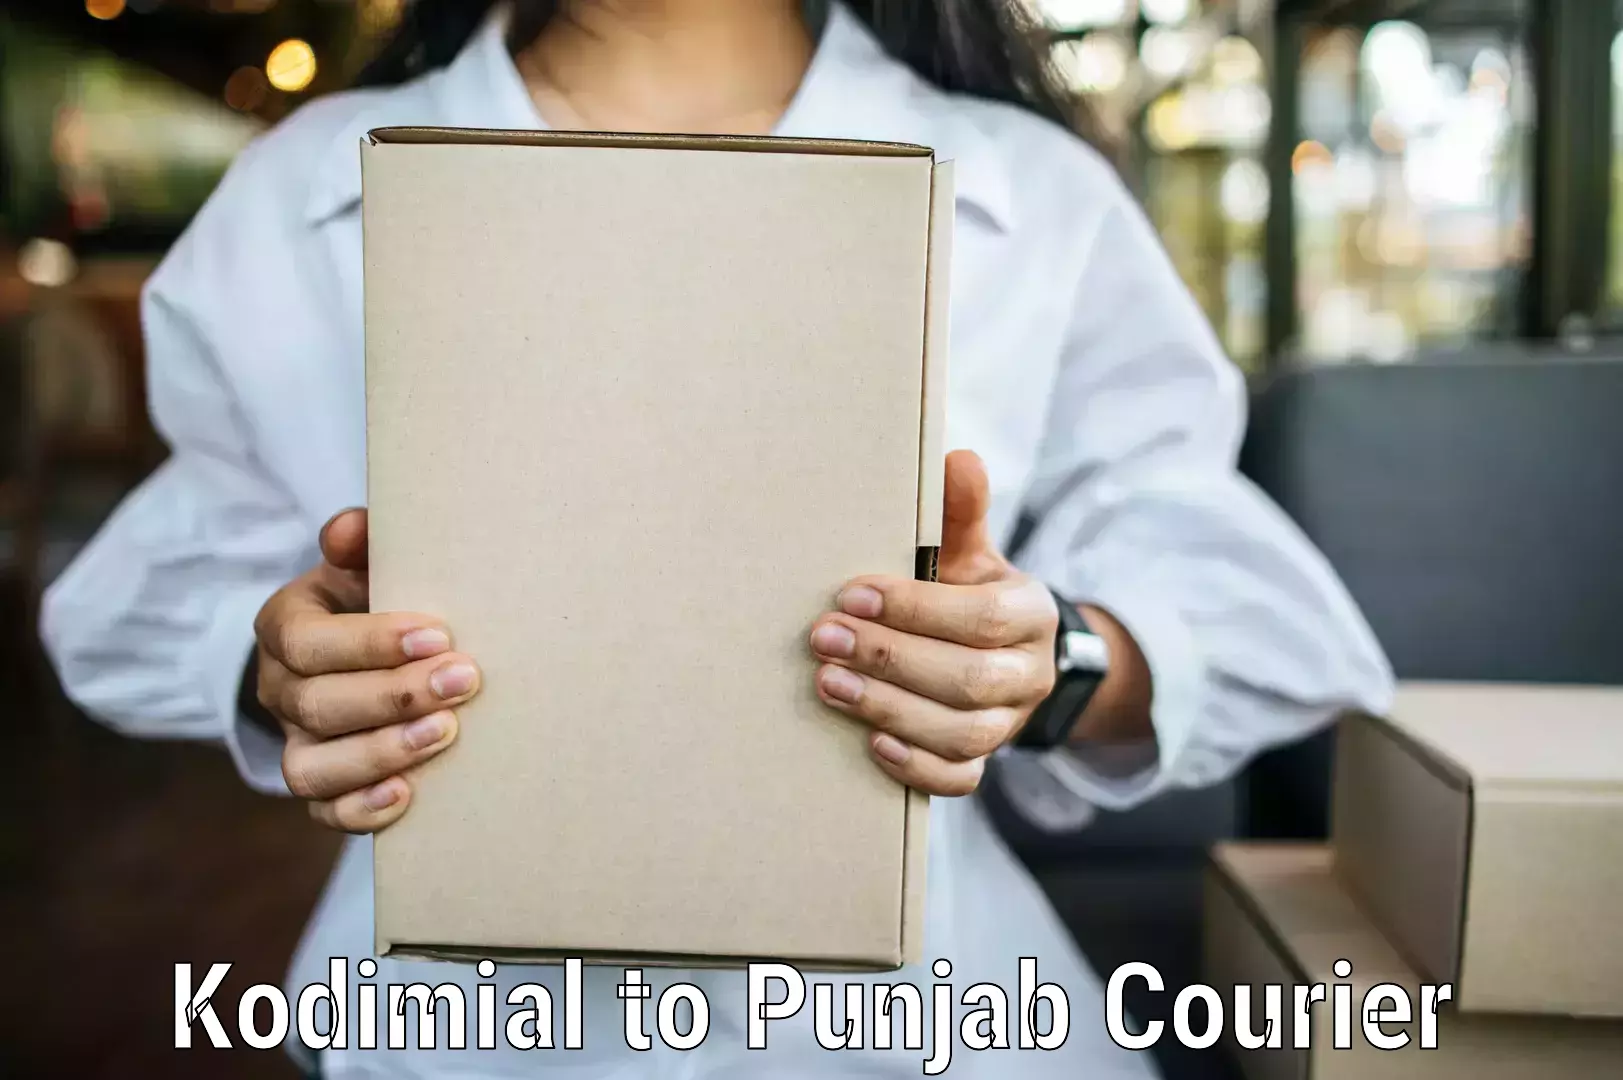 Logistics service provider Kodimial to Punjab